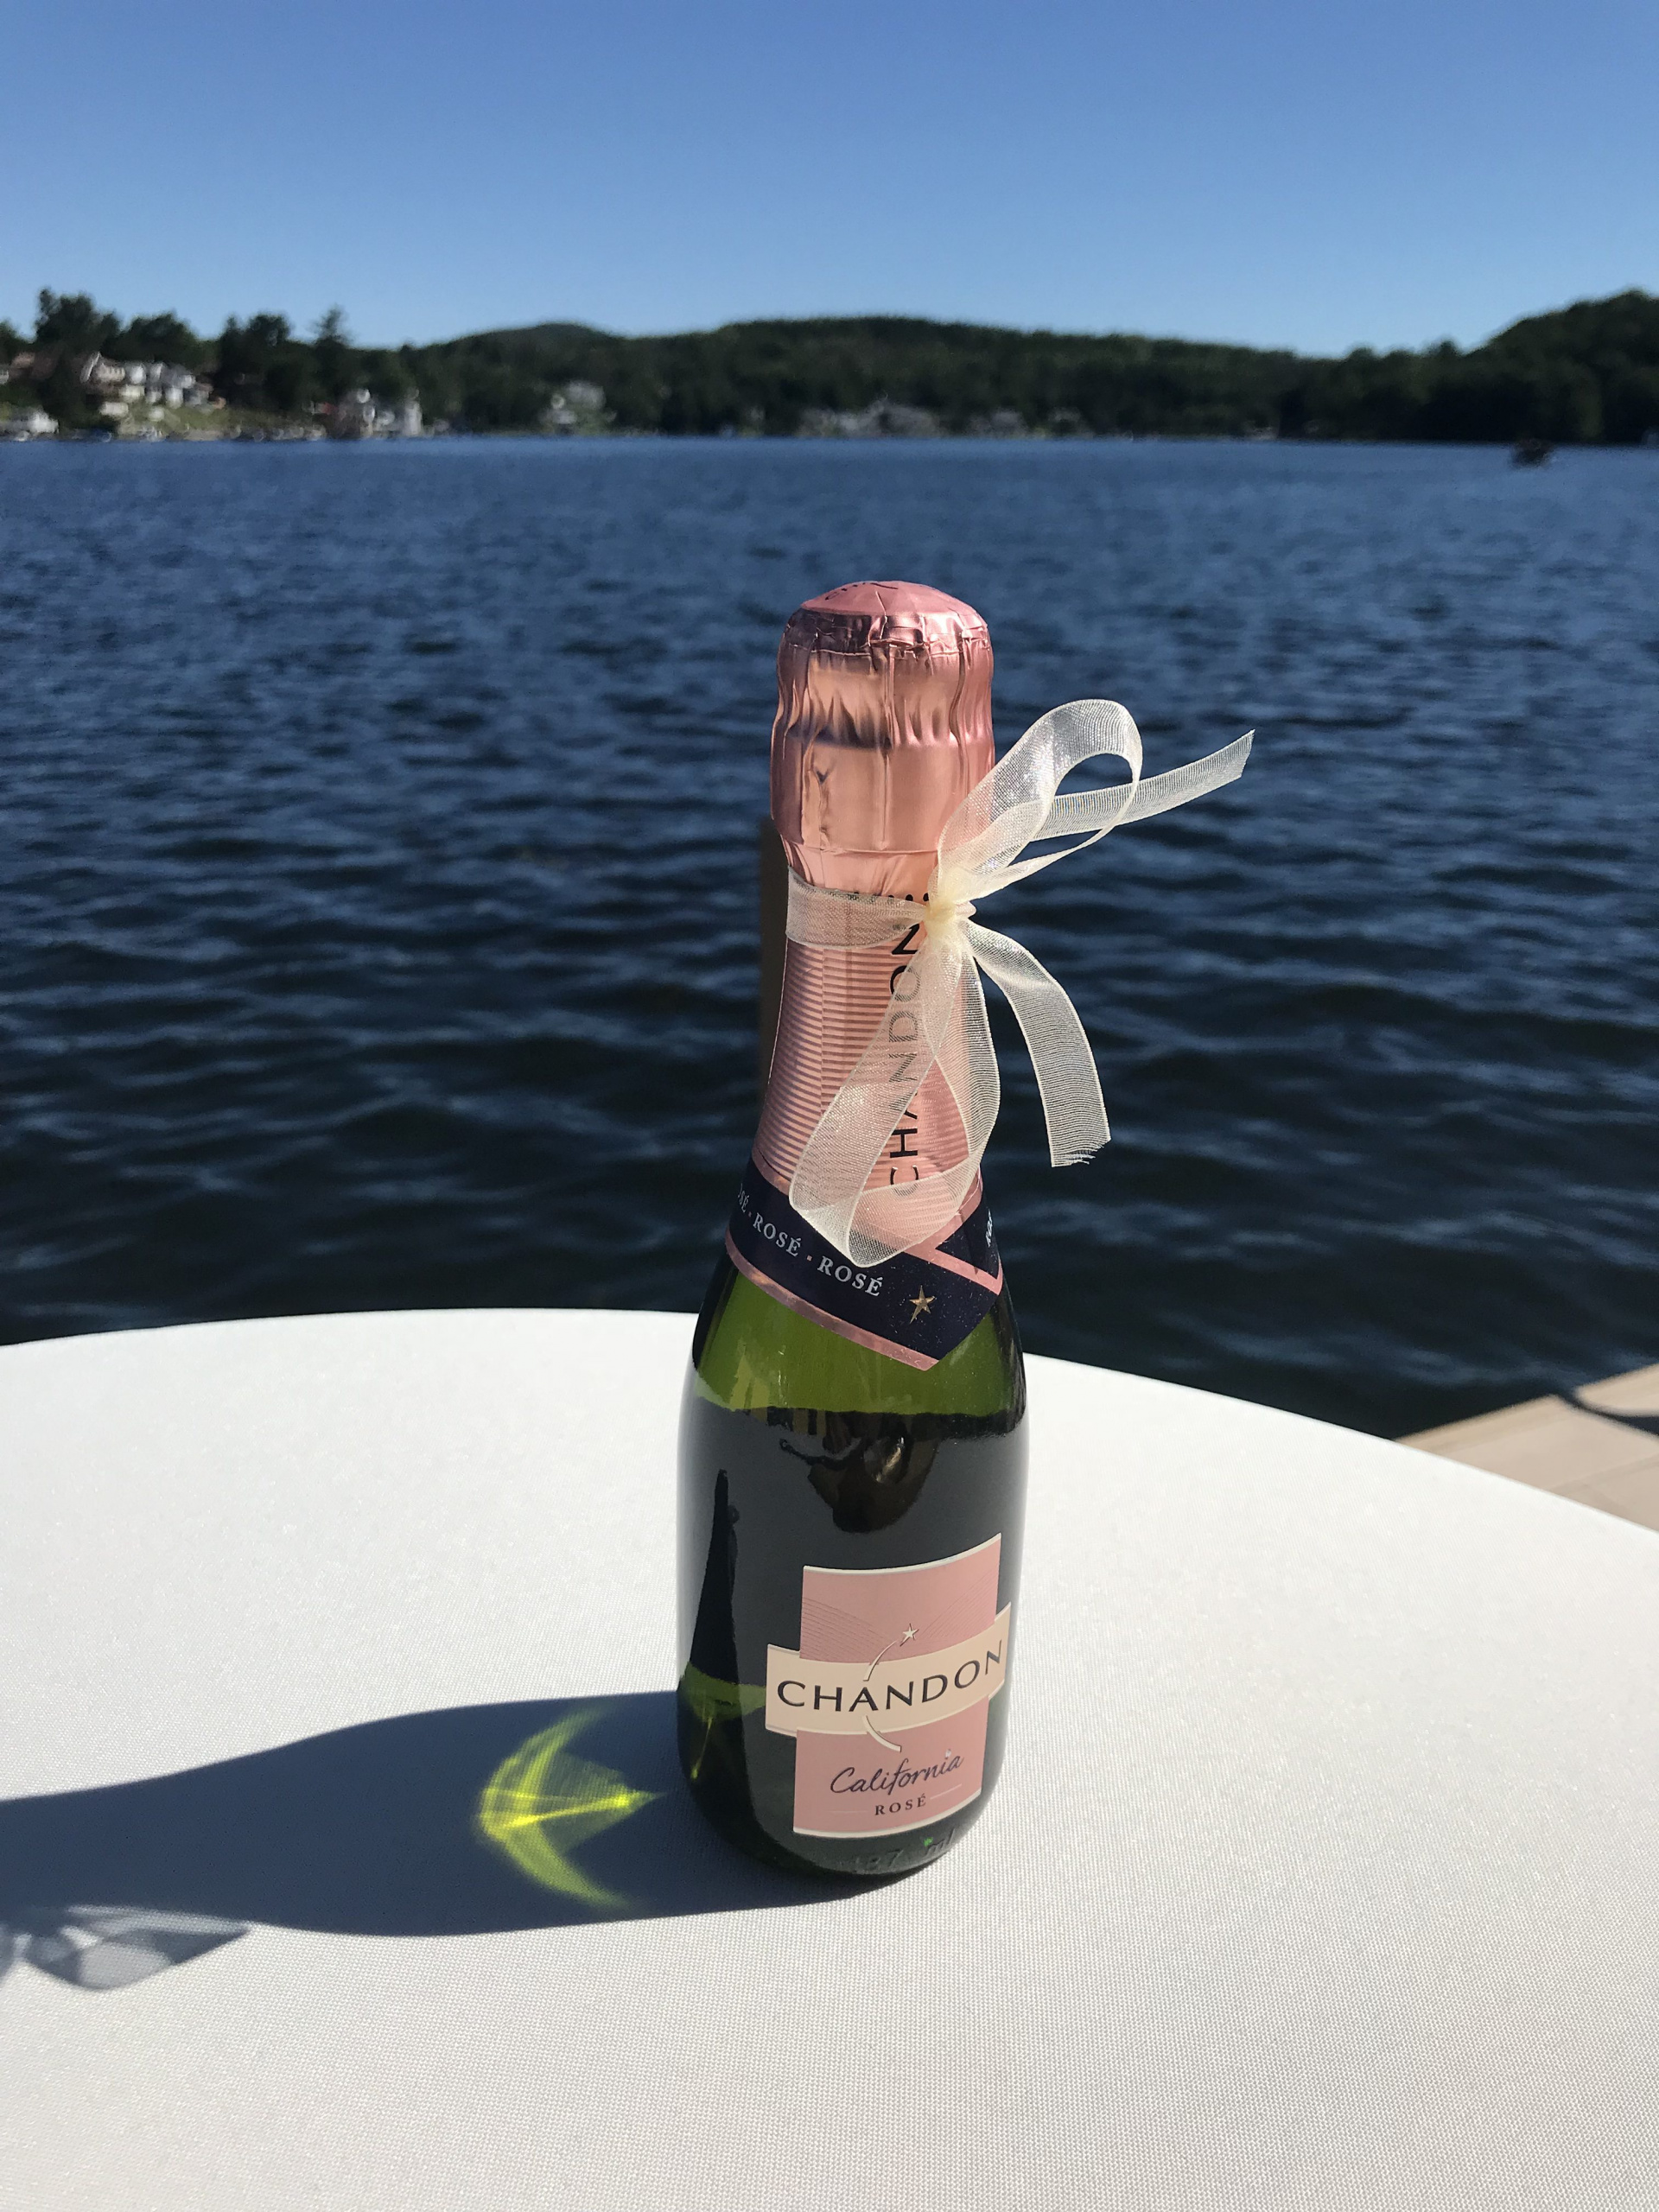 Mini Champagne Bottles, Cute Gift Ideas